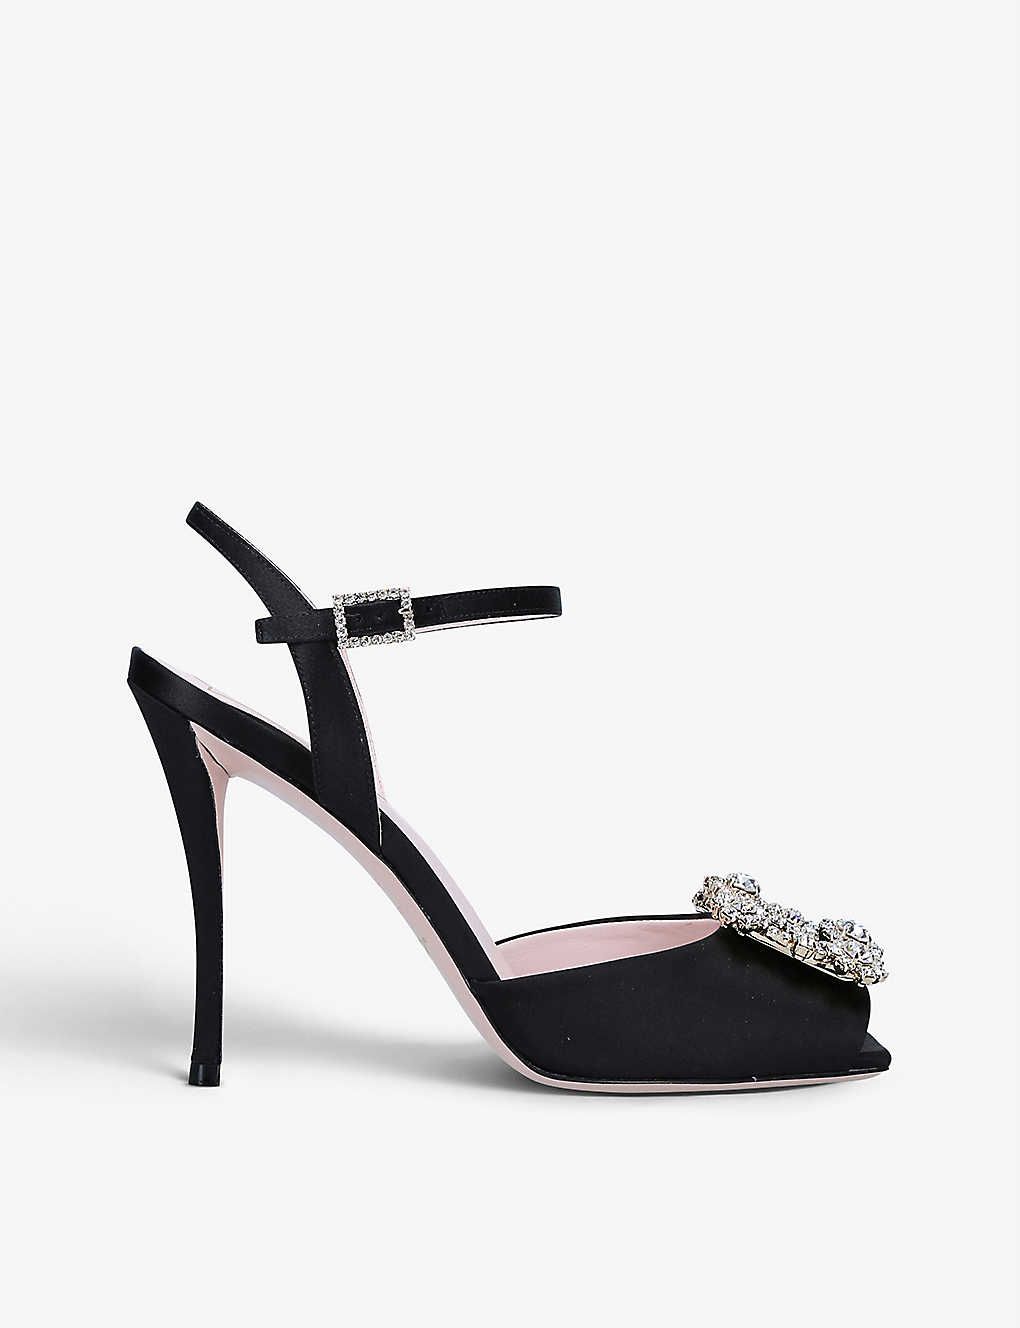 Flower Strass heeled satin sandals | Selfridges